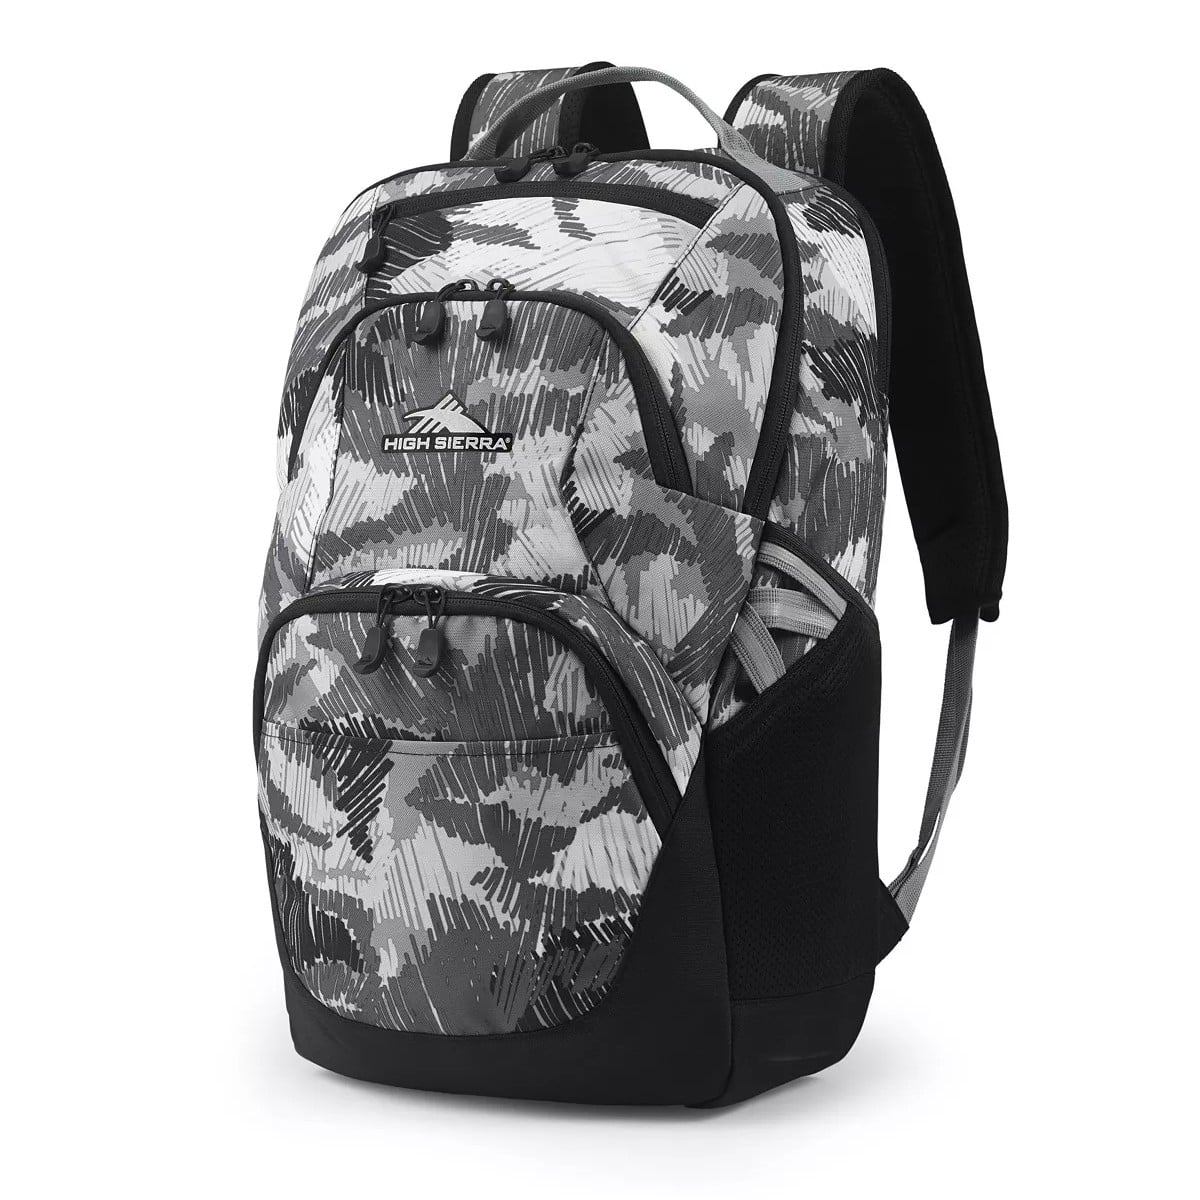 Рюкзак High Sierra Swoop Sg, серый/черный/белы цена и фото